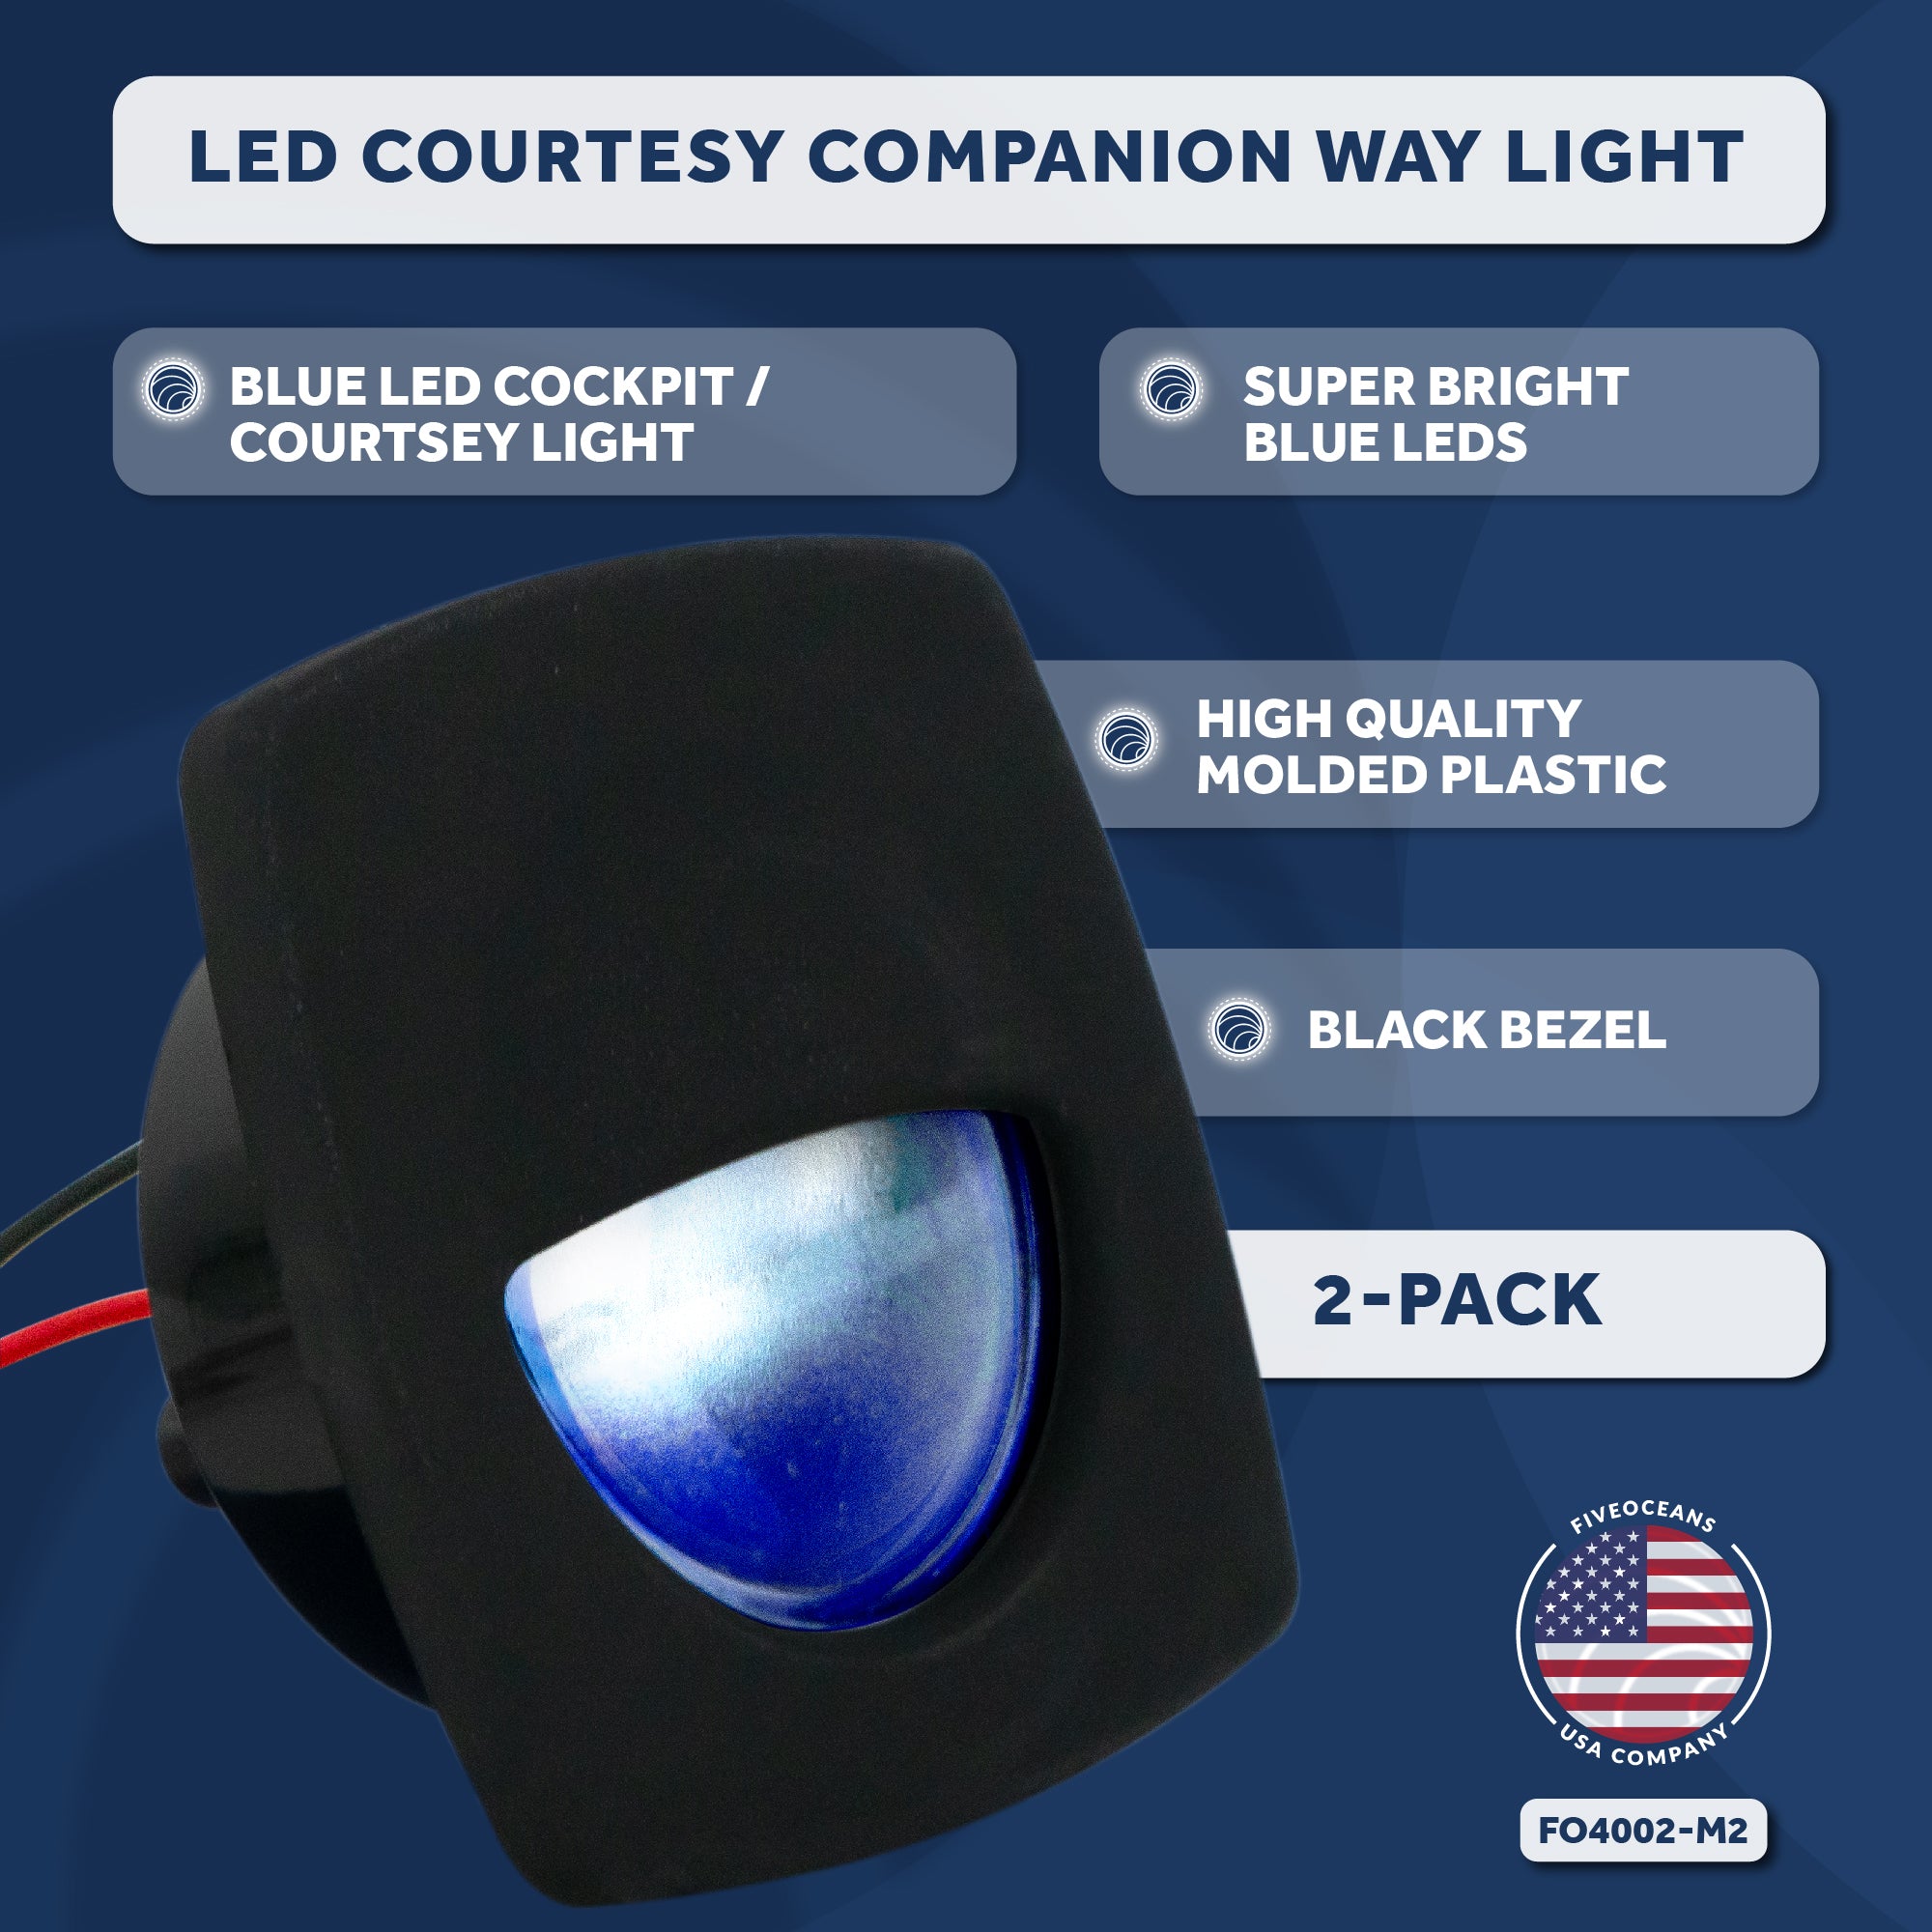 LED Courtesy Companion Way Light, Square, Blue light, 2-pack - FO4002-M2